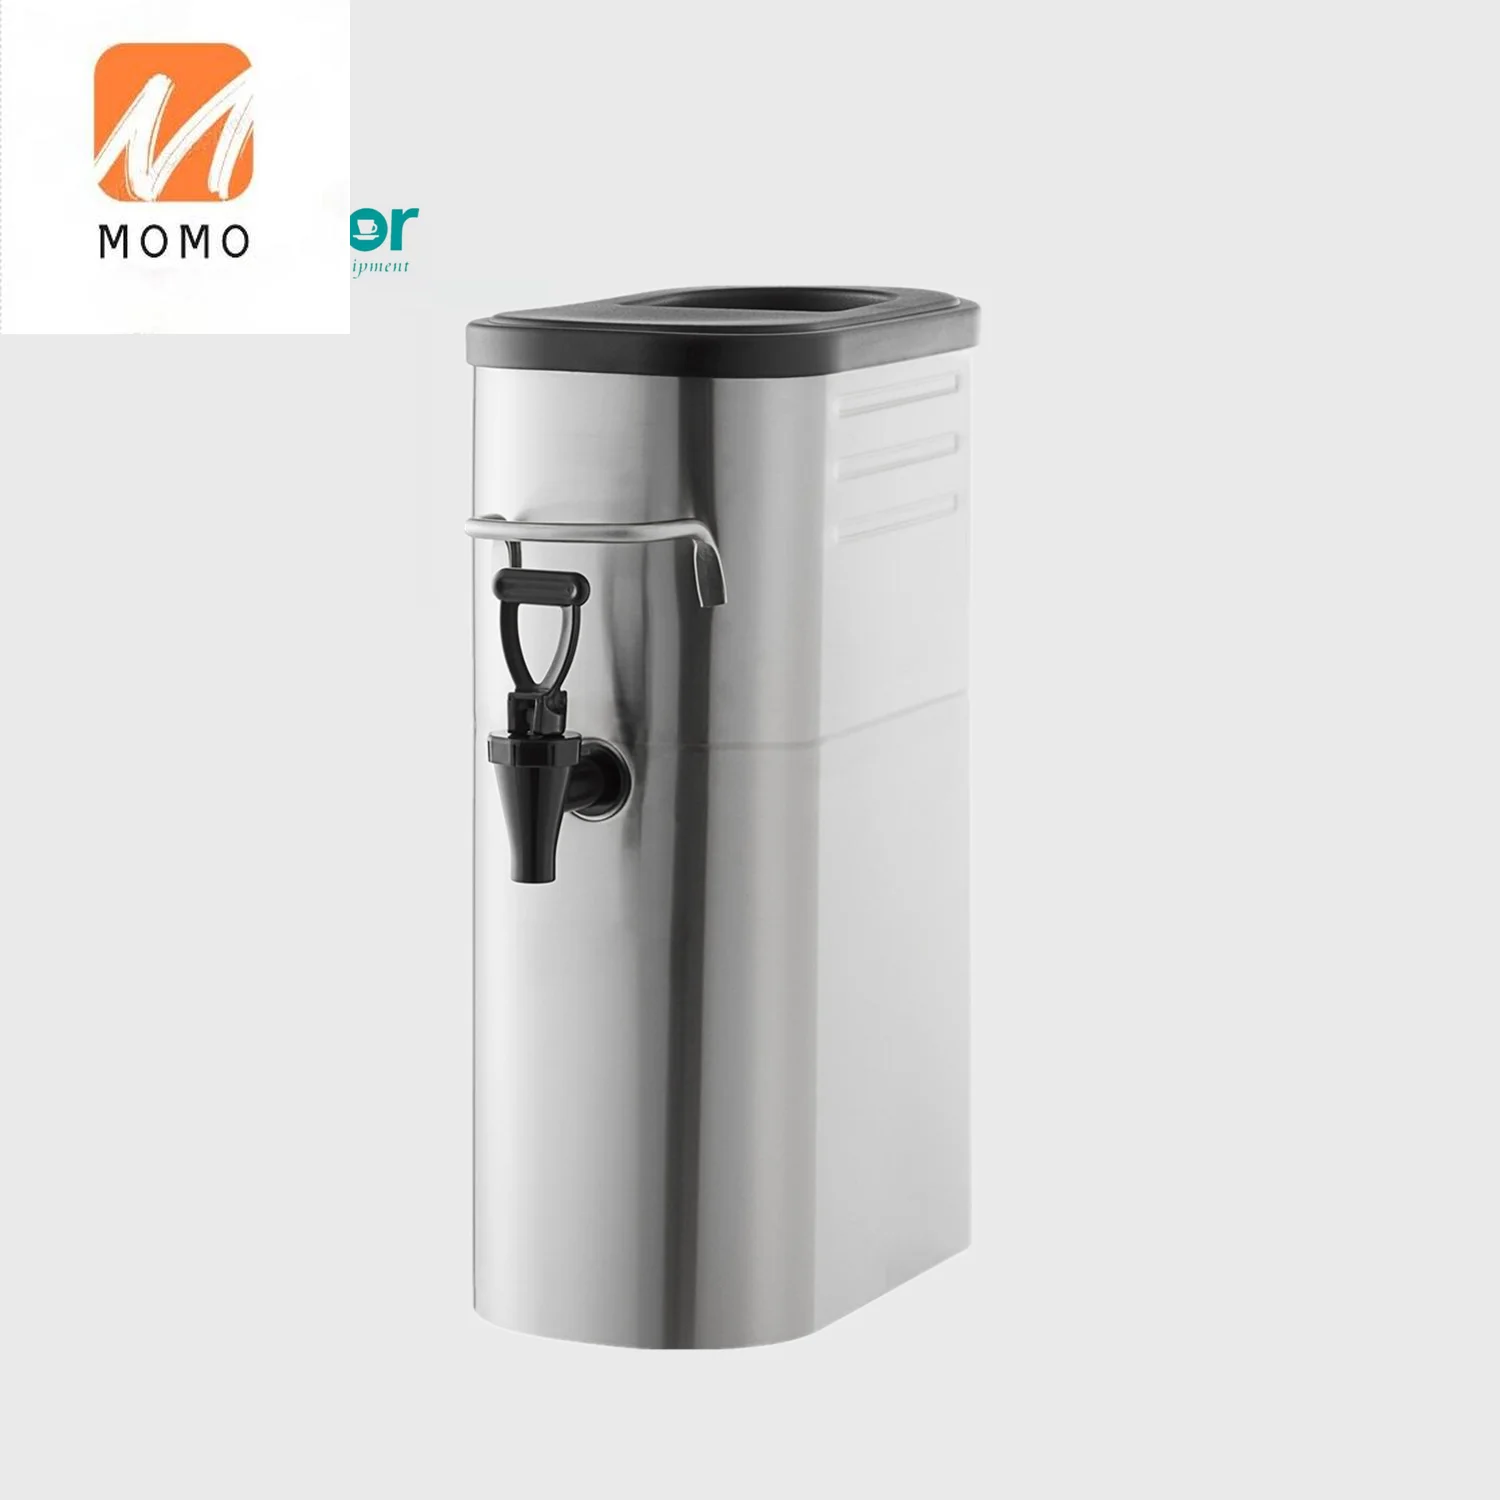 Stainless Steel Drinking Dispenser Hot Cold Tea water dispenser 3.2-GALLONS